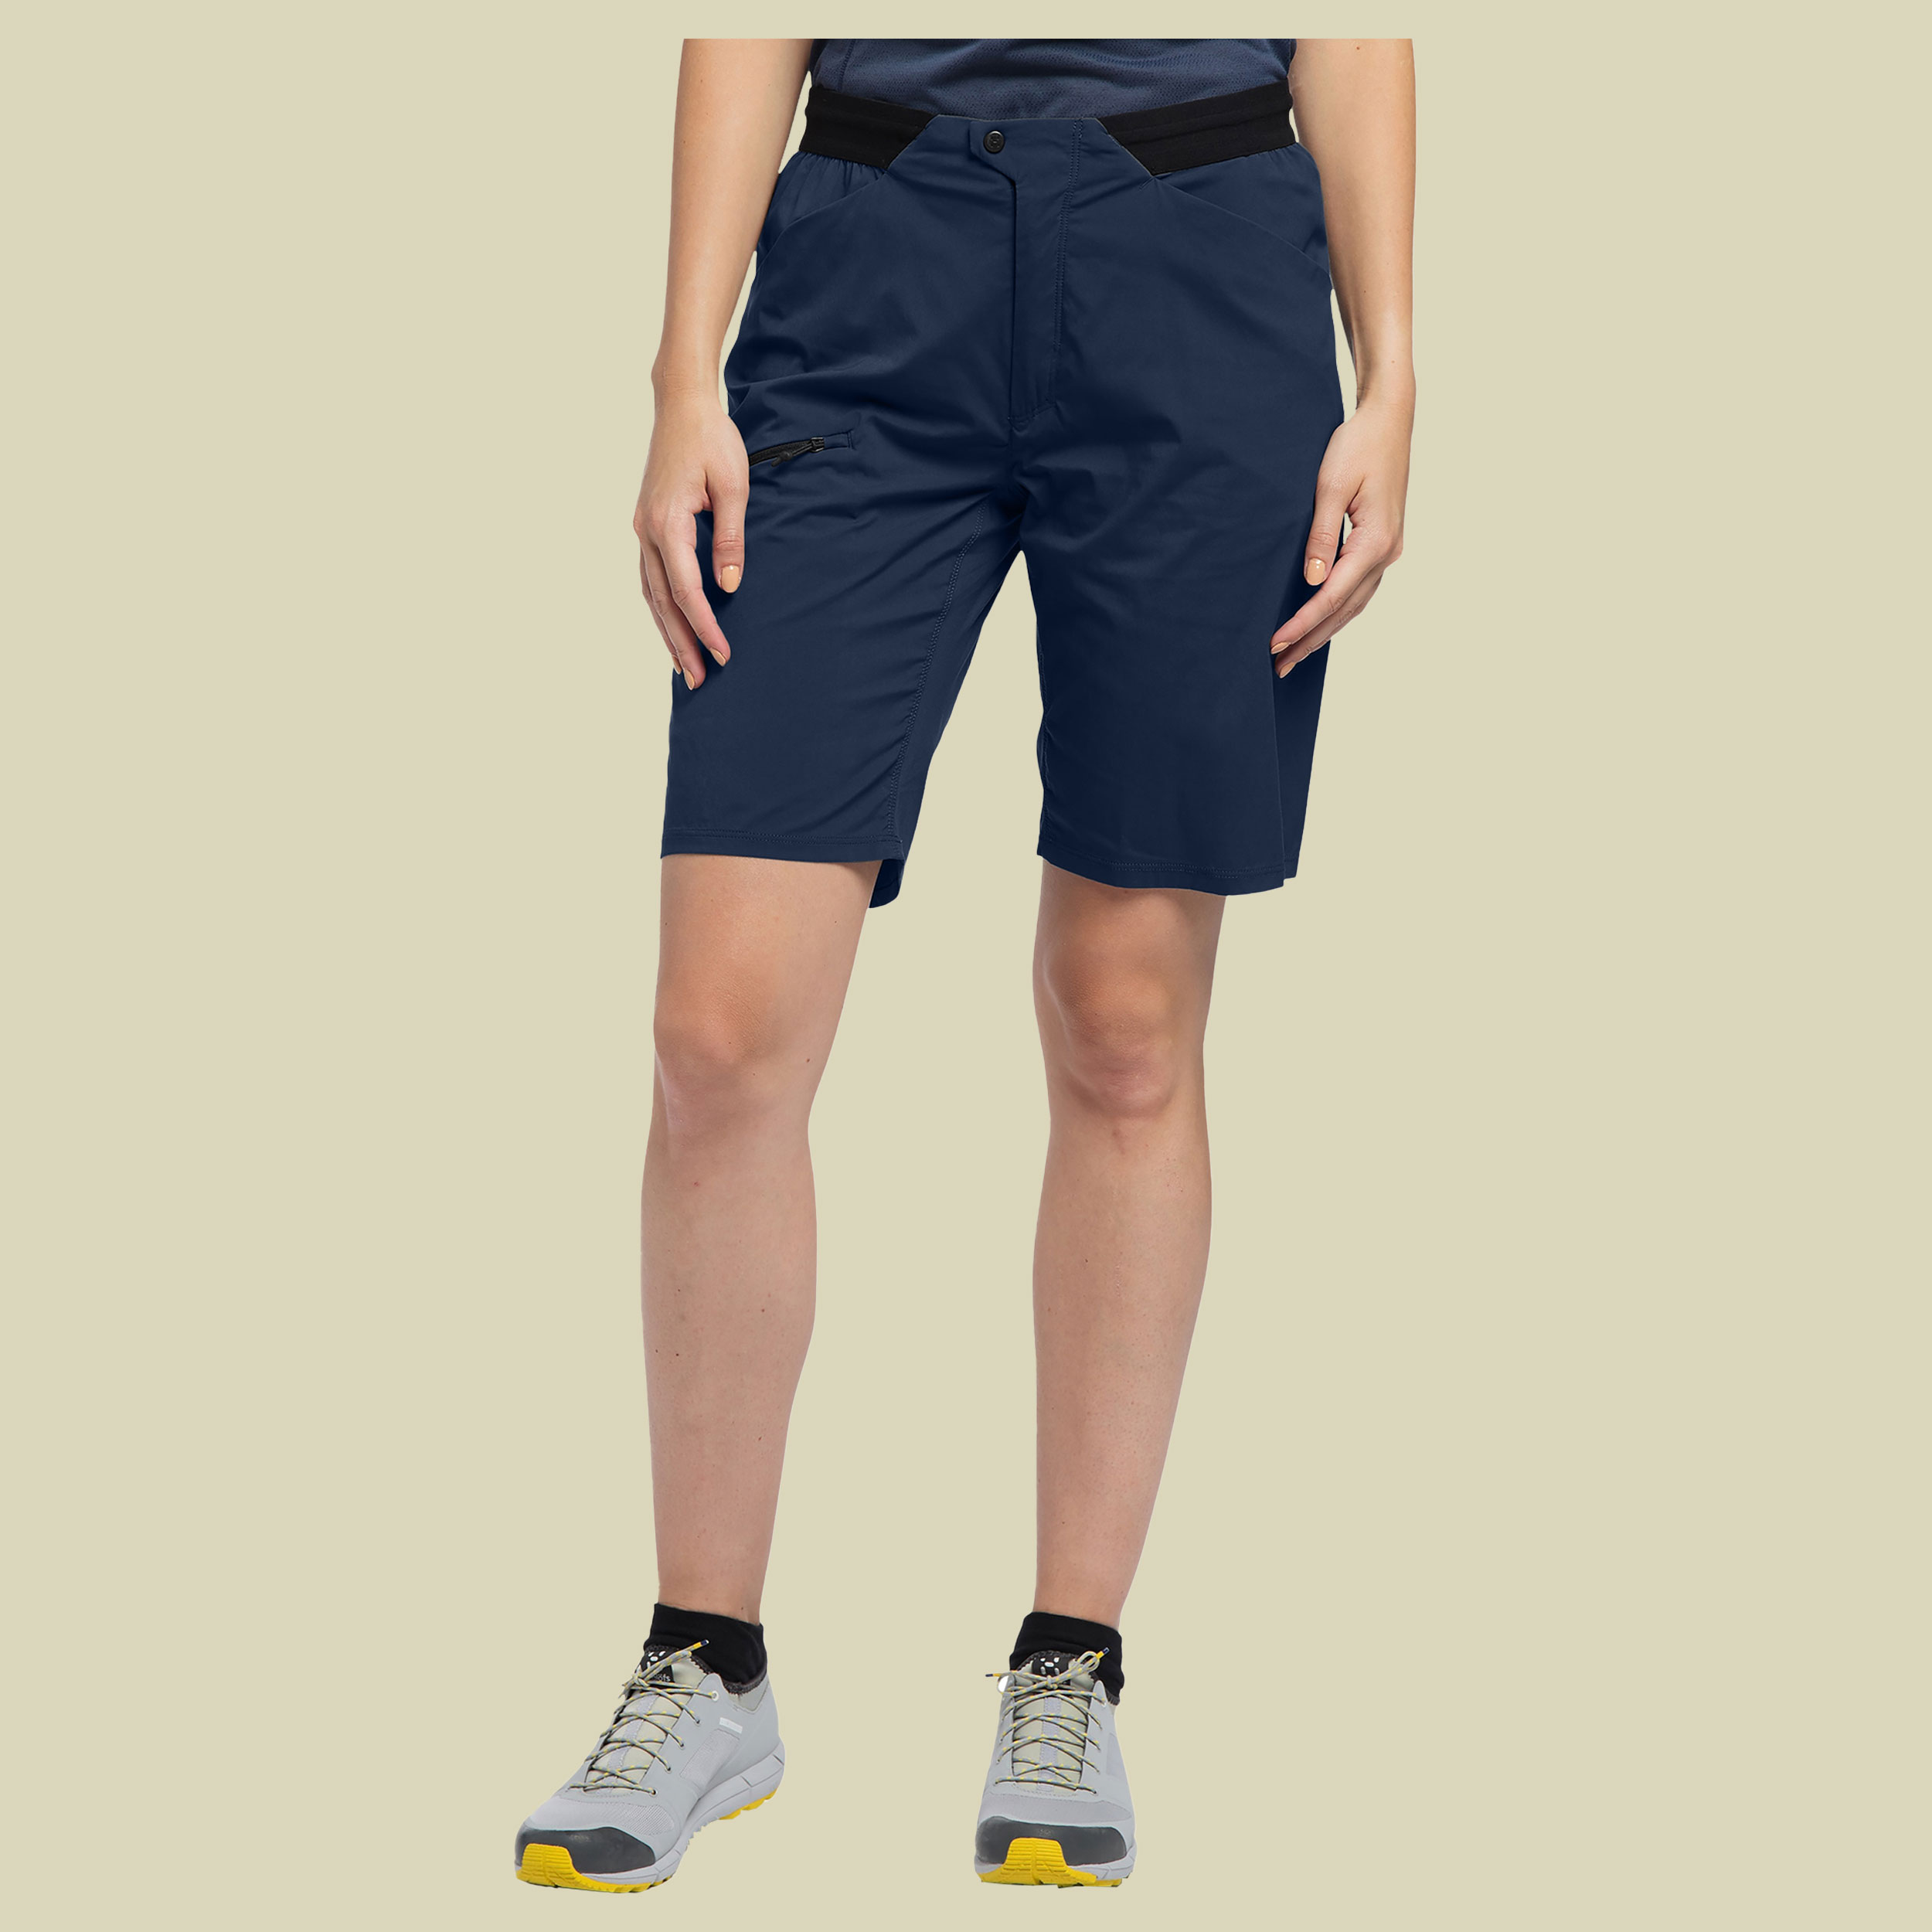 L.I.M Fuse Shorts Women Größe 42 Farbe tarn blue